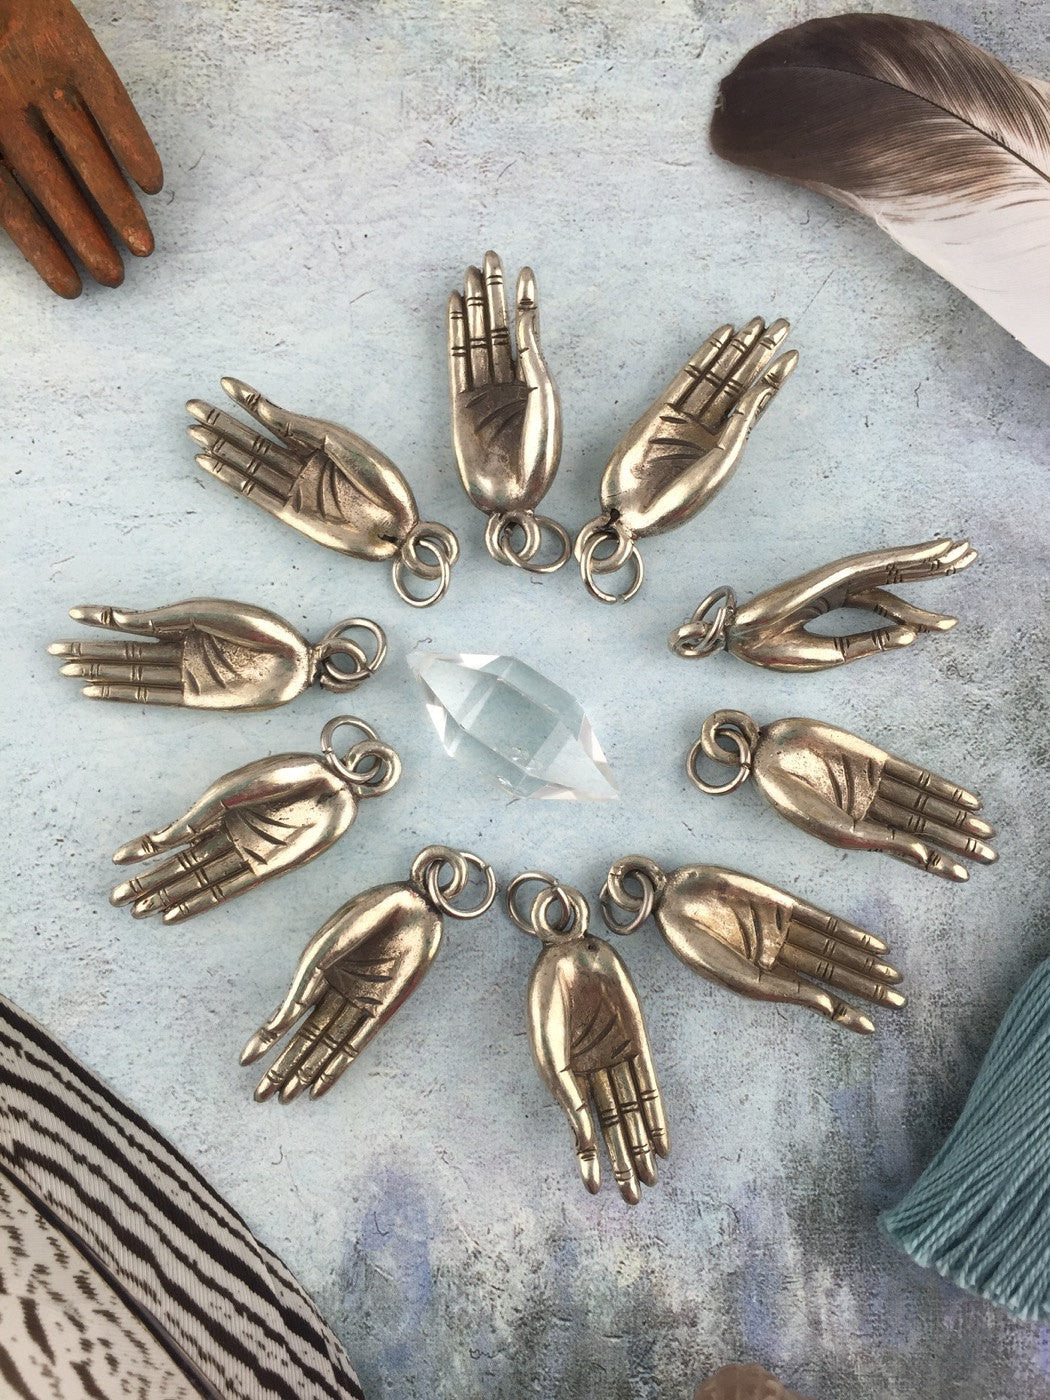 Gyan Mudra White Brass Pendant, 1 Himalayan Silver Hand Pendant, Buddhist, Yoga, Meditation, Spiritual Jewelry Making Supplies, 1 Pendant - ShopWomanShopsWorld.com. Bone Beads, Tassels, Pom Poms, African Beads.